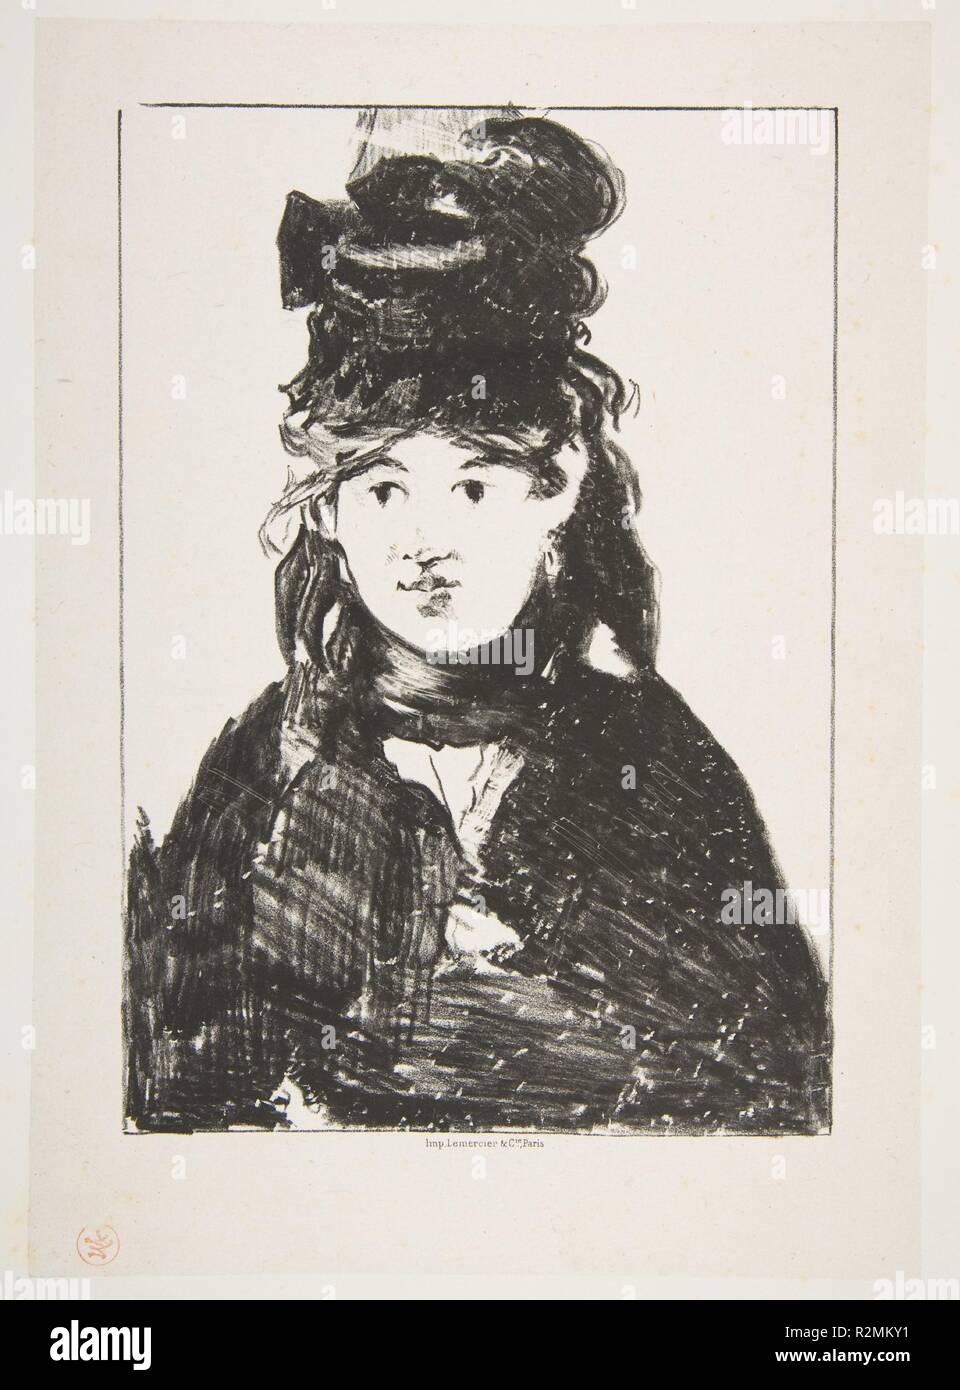 Berthe Morisot (in nero). Artista: Édouard Manet (francese, Parigi Parigi 1832-1883). Dimensioni: Immagine: 9 13/16 x 6 15/16 in. (24,9 x 17,6 cm) foglio: 15 3/4 x 11 7/8a. (40 x 30,2 cm). Stampante: Lemercier & Cie. (francese, Parigi). Sitter: Ritratto di Berthe Morisot (francese, Bourges 1841-1895 Paris). Data: 1872-74. Museo: Metropolitan Museum of Art di New York, Stati Uniti d'America. Foto Stock